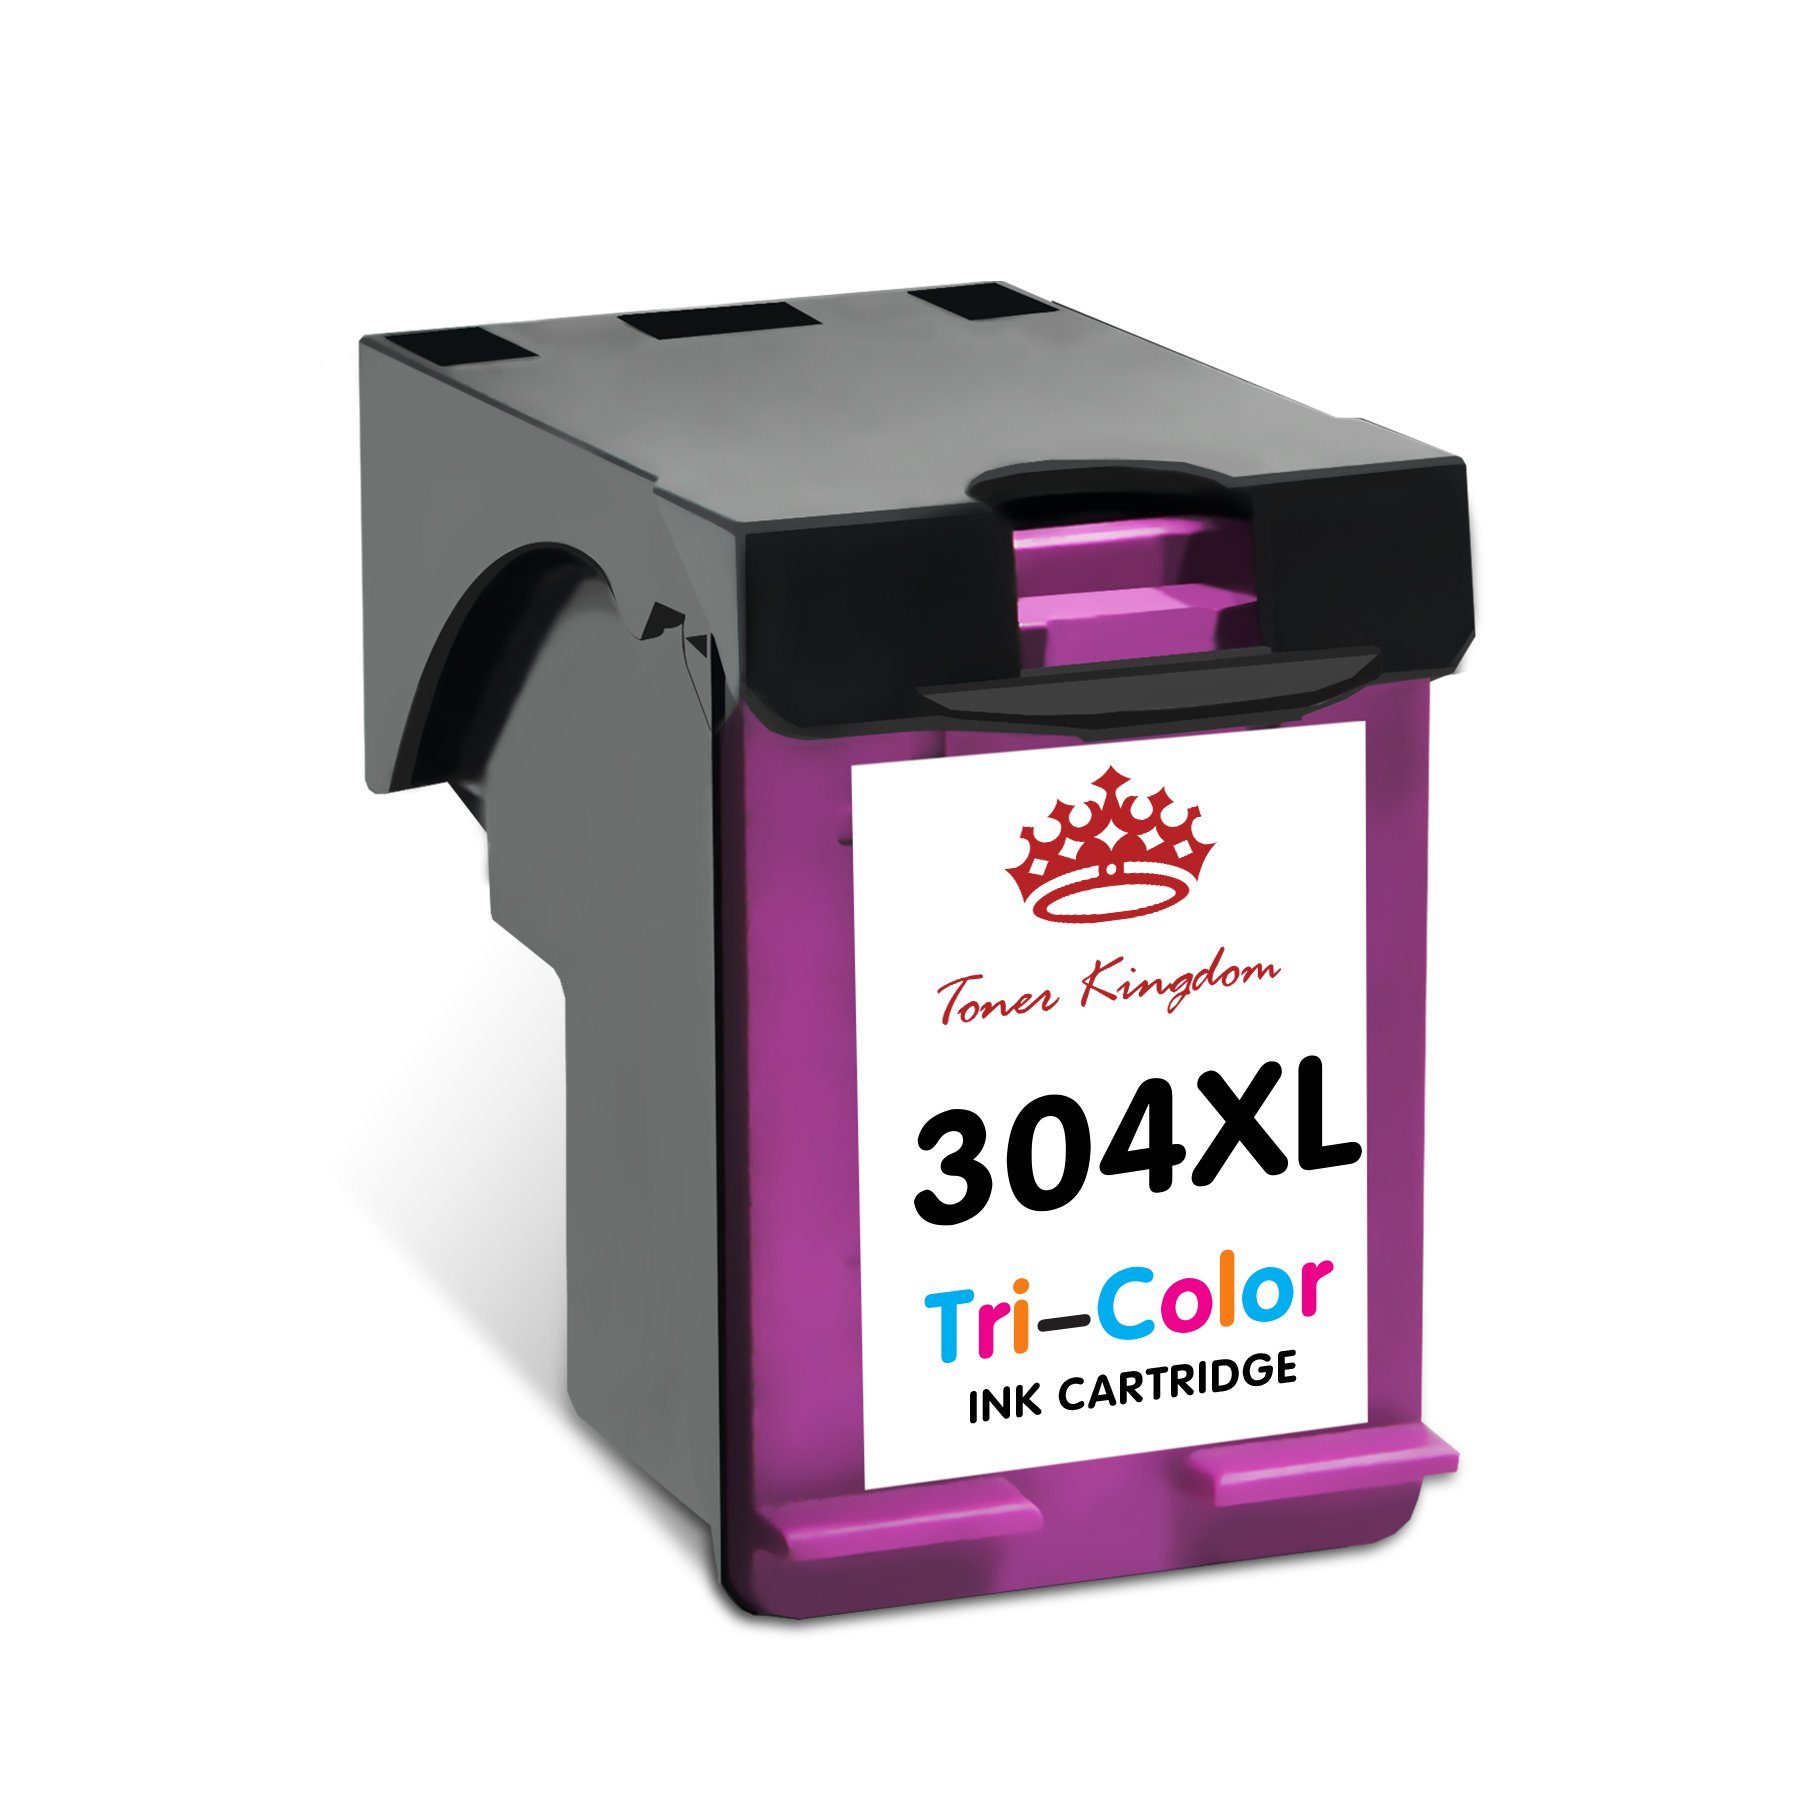 Toner Kingdom Kompatible für HP 304 XL 304XL AMP 130 ENVY 5000 5030 Tintenpatrone Tricolor